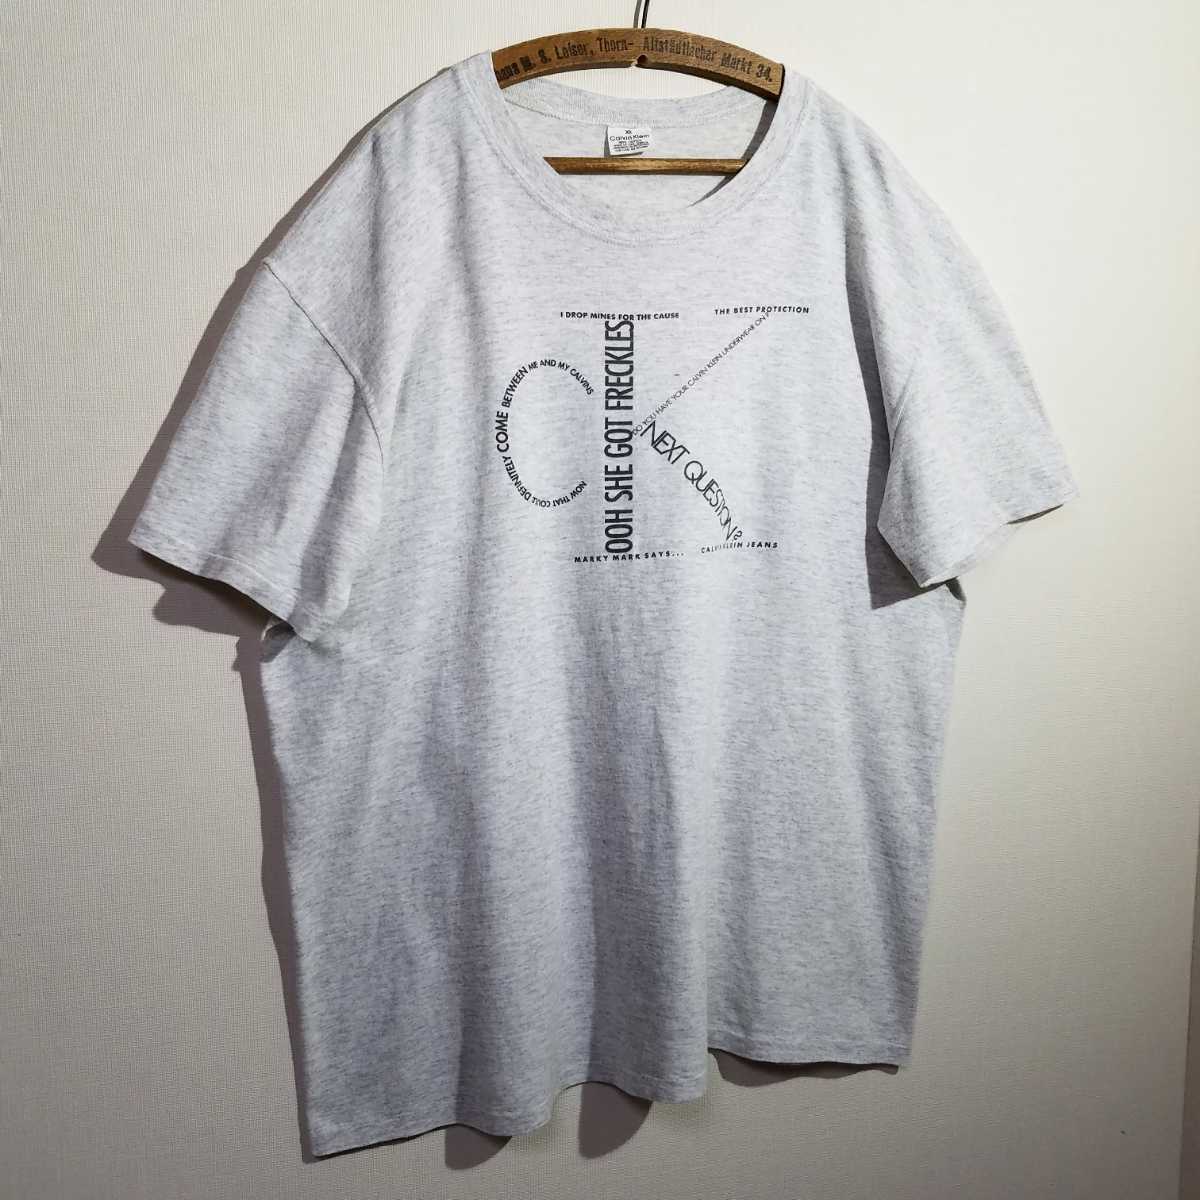 90s CALVIN KLEIN MARKY MARK SAY T-shirt XL kate moss herb ritts bruce weber CK Calvin Klein marquee Mark Kei Tomos 